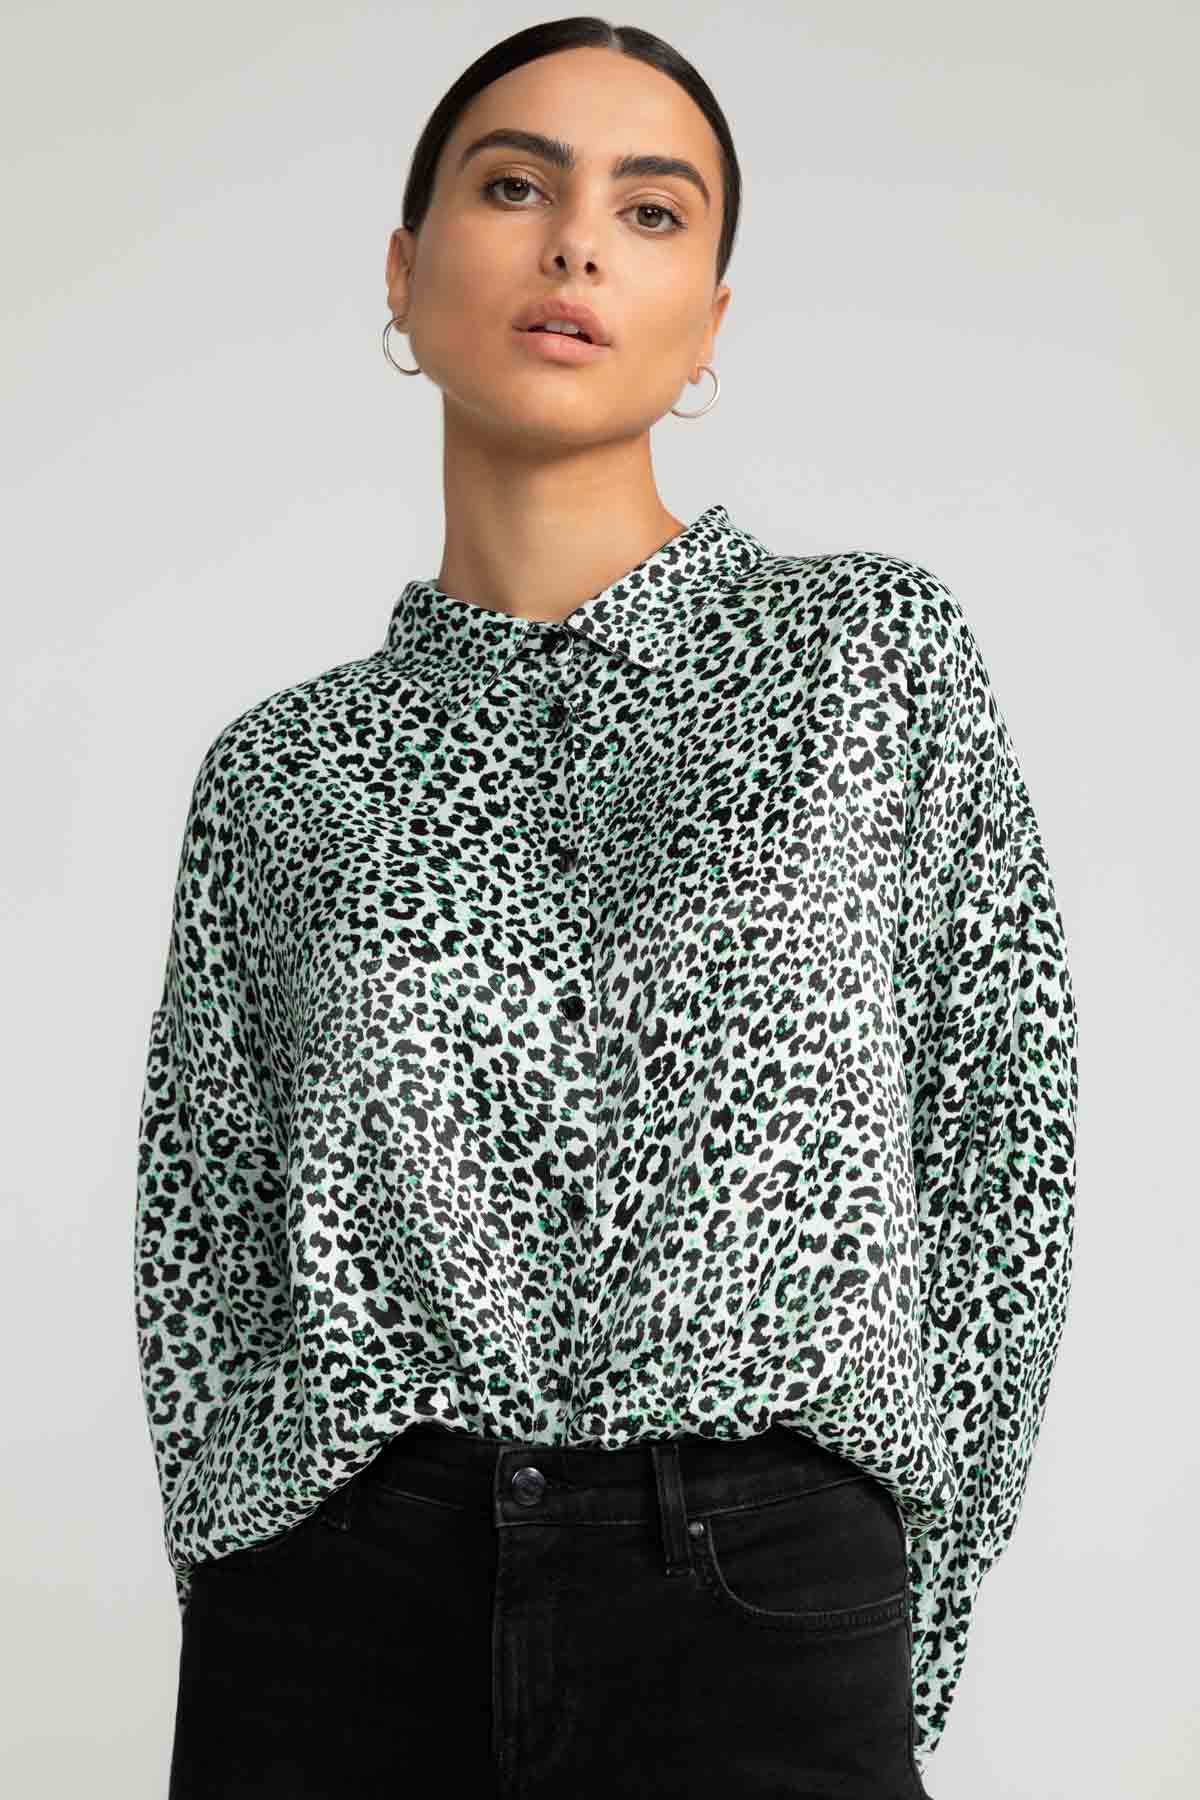 Alaiya blouse in Sprinkled Leo pattern by LOVJOI made of ENKA™ viscose and Ecovero™